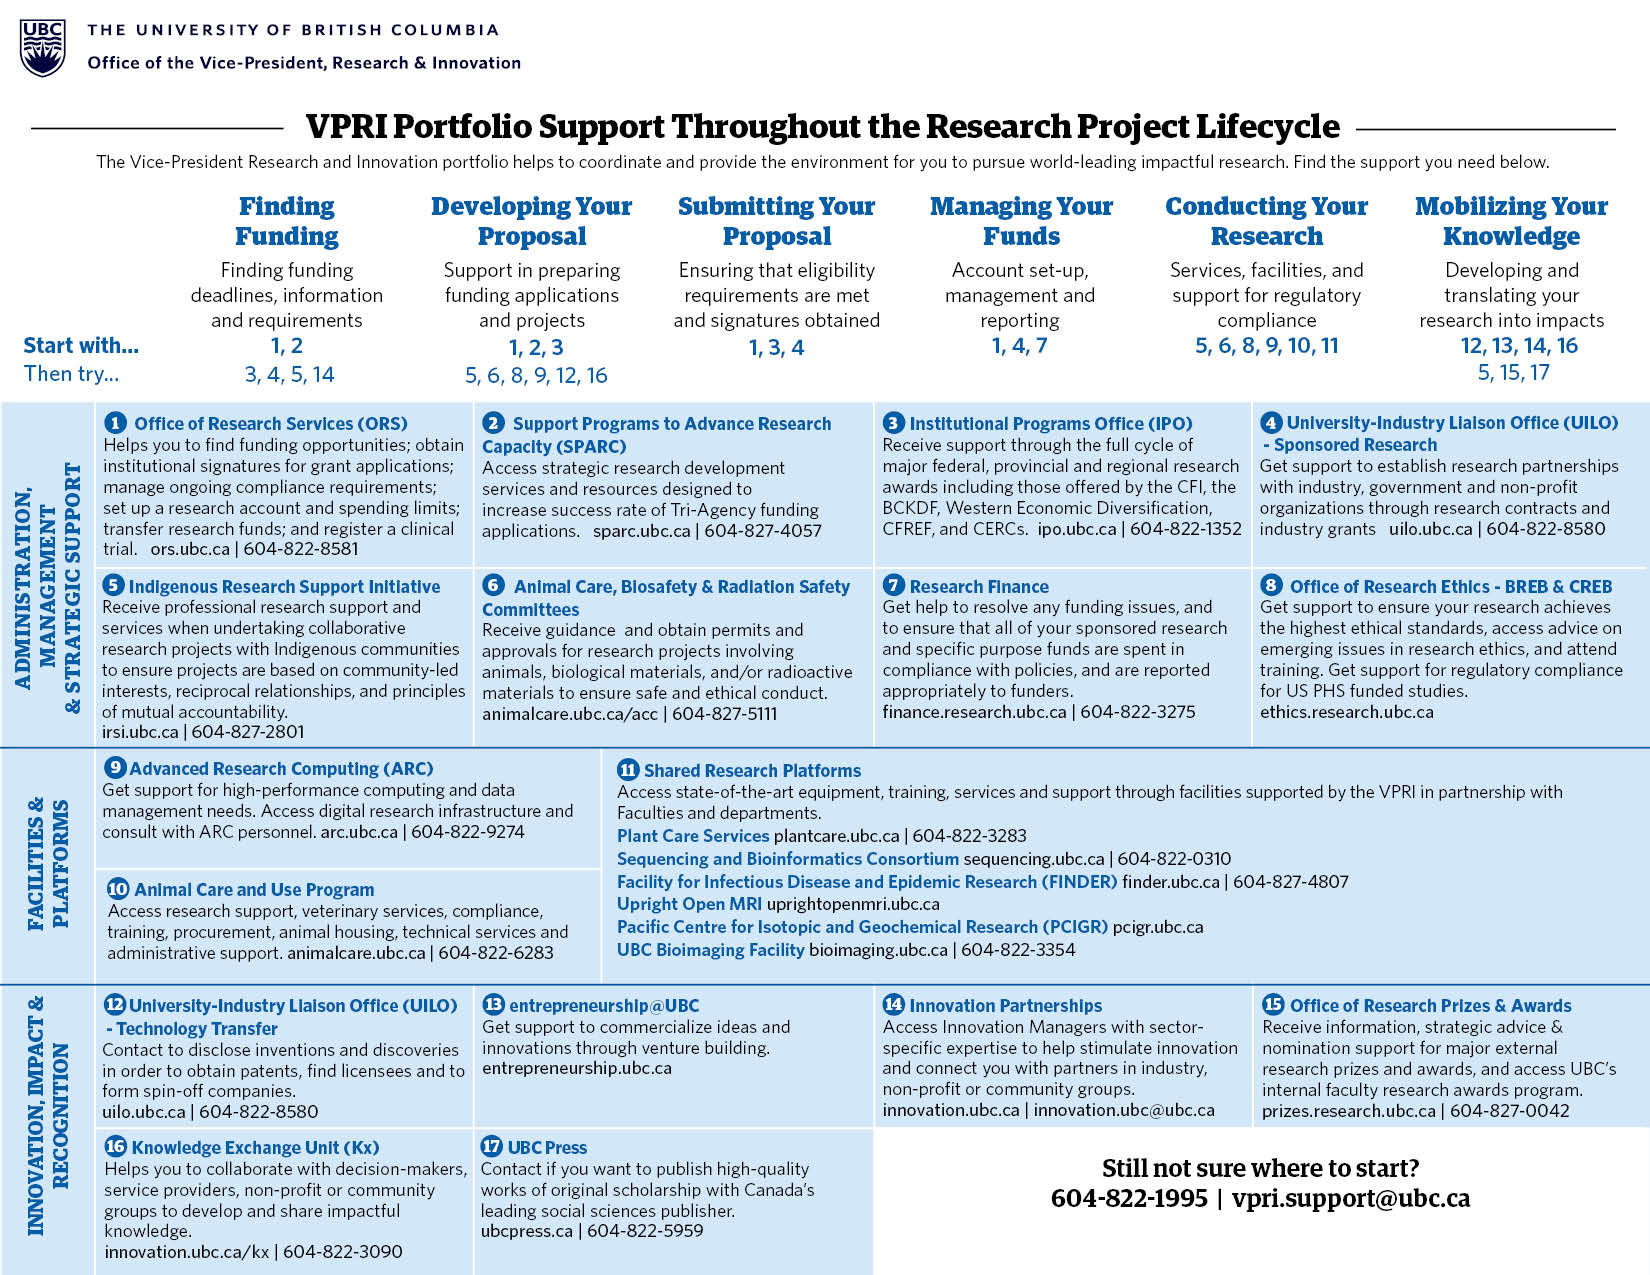 Handout listing all units in VPRI portfolio